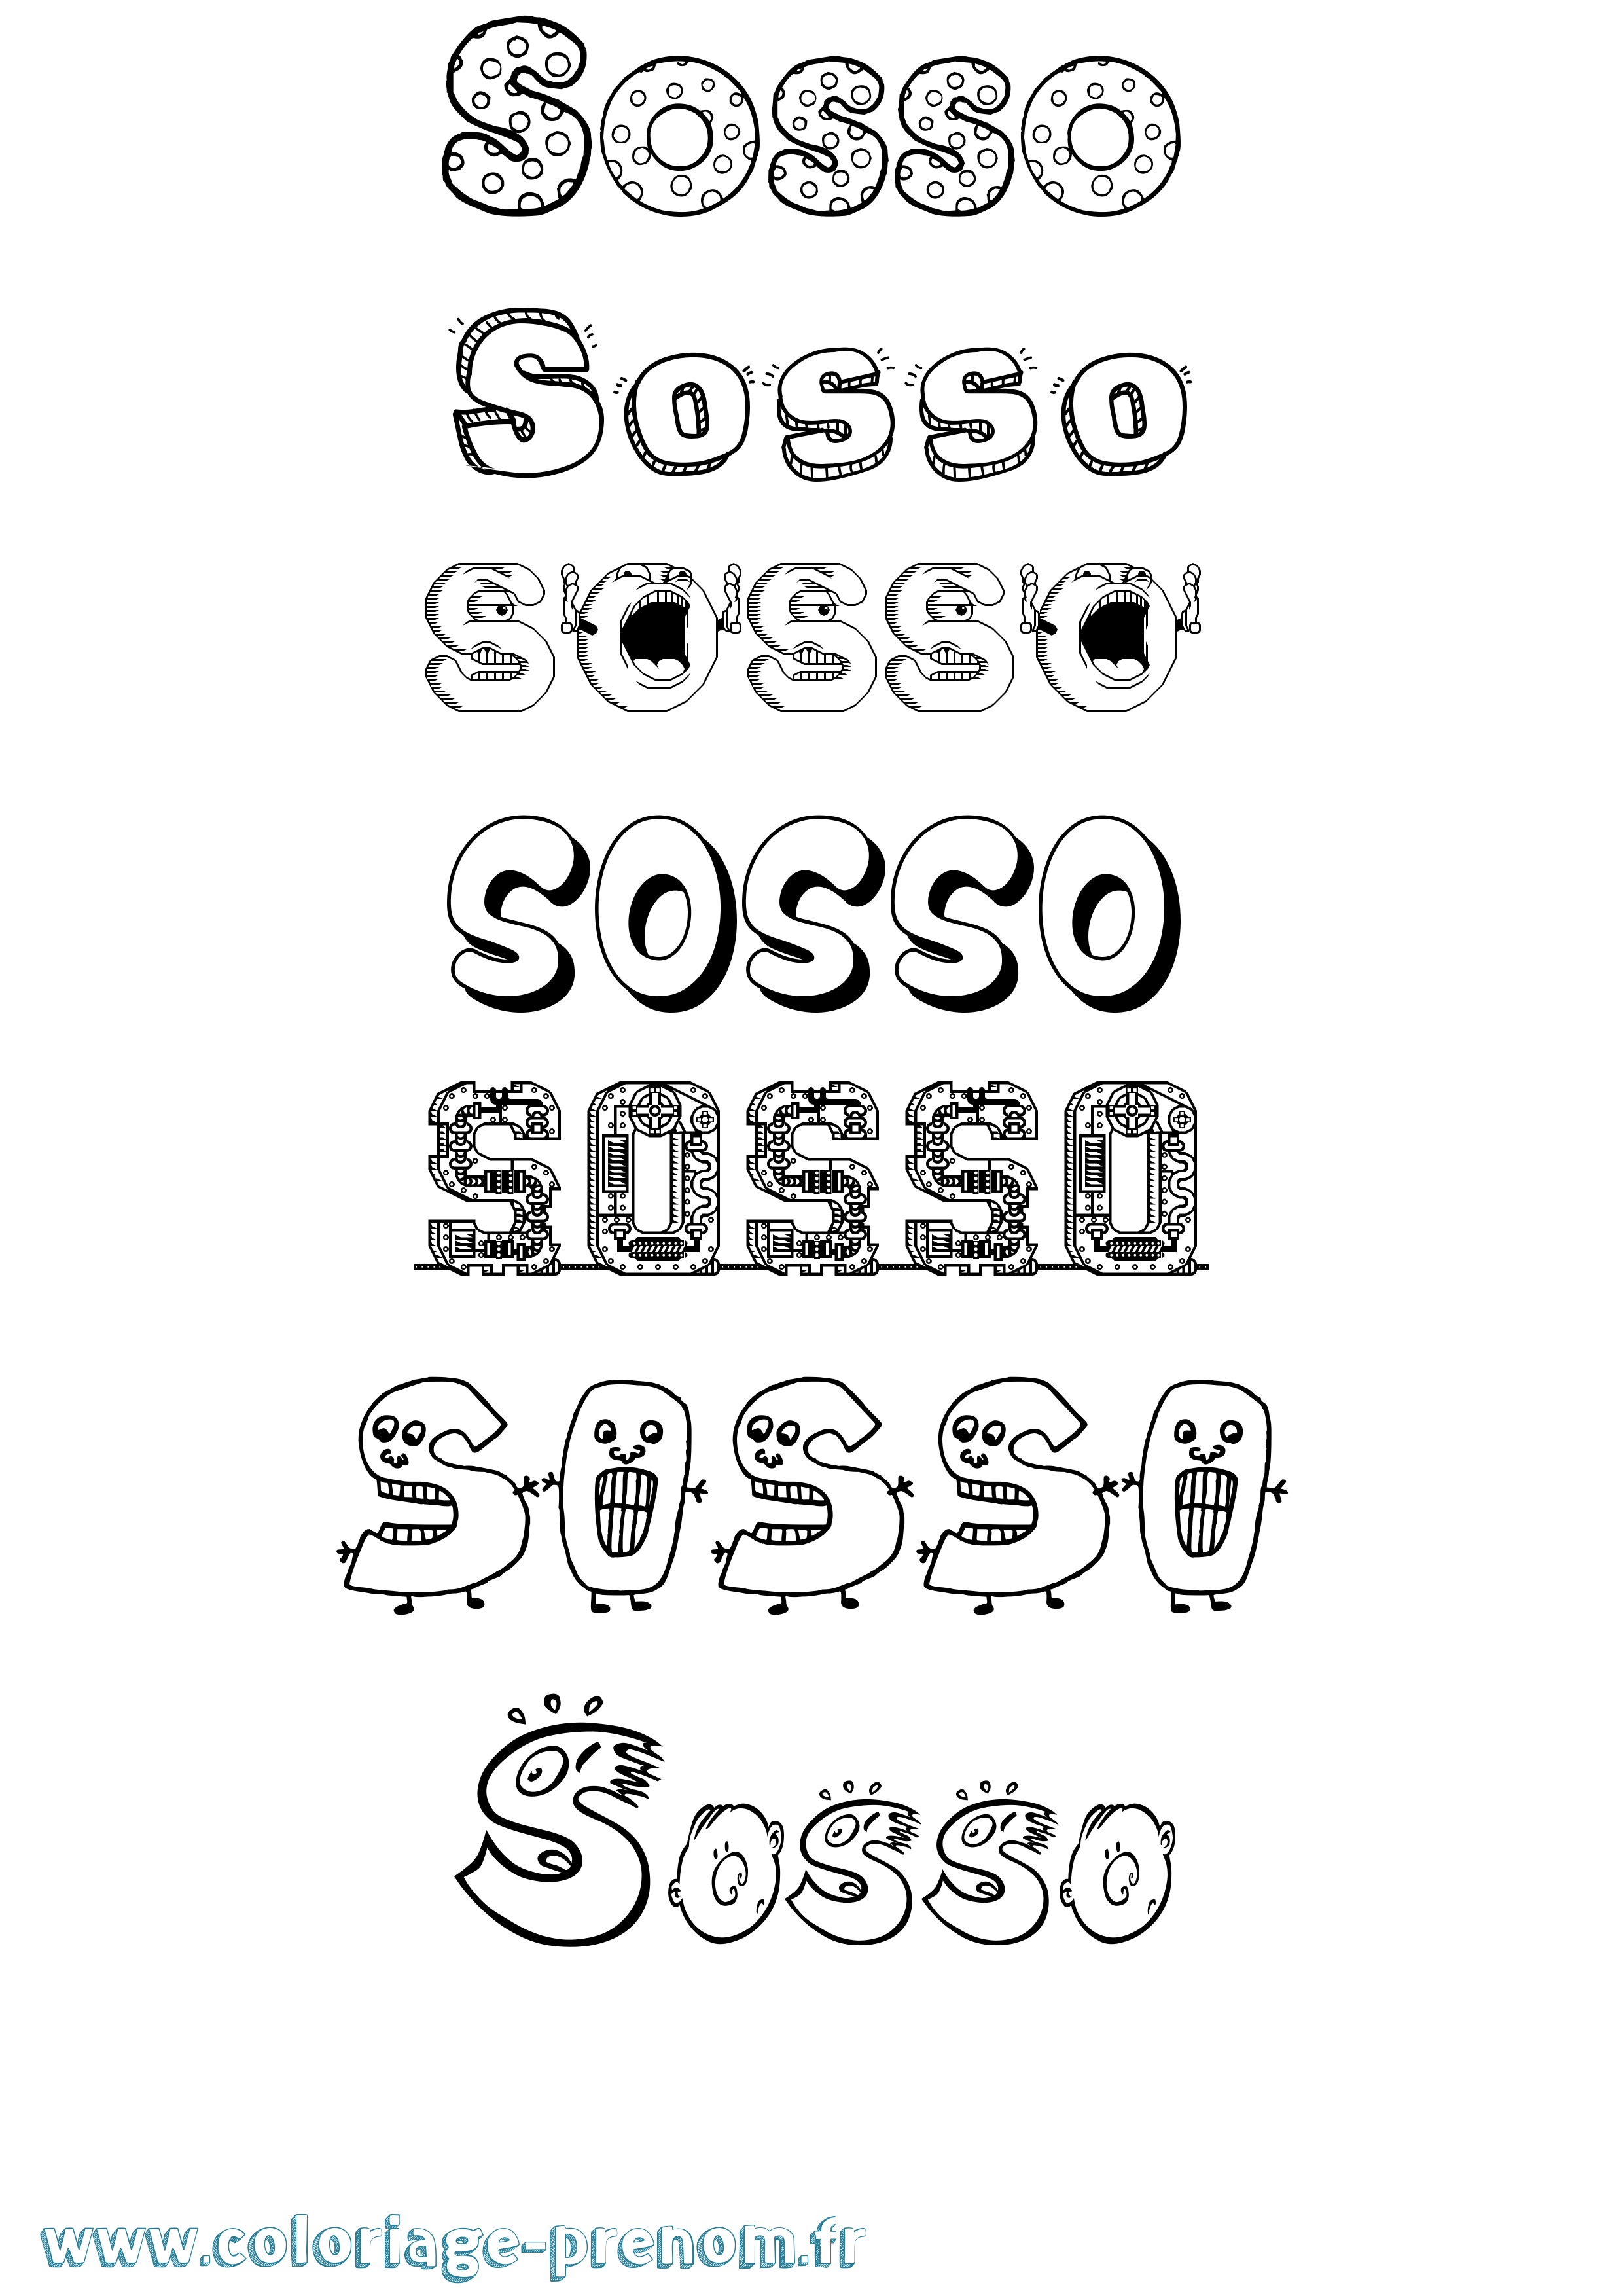 Coloriage prénom Sosso Fun